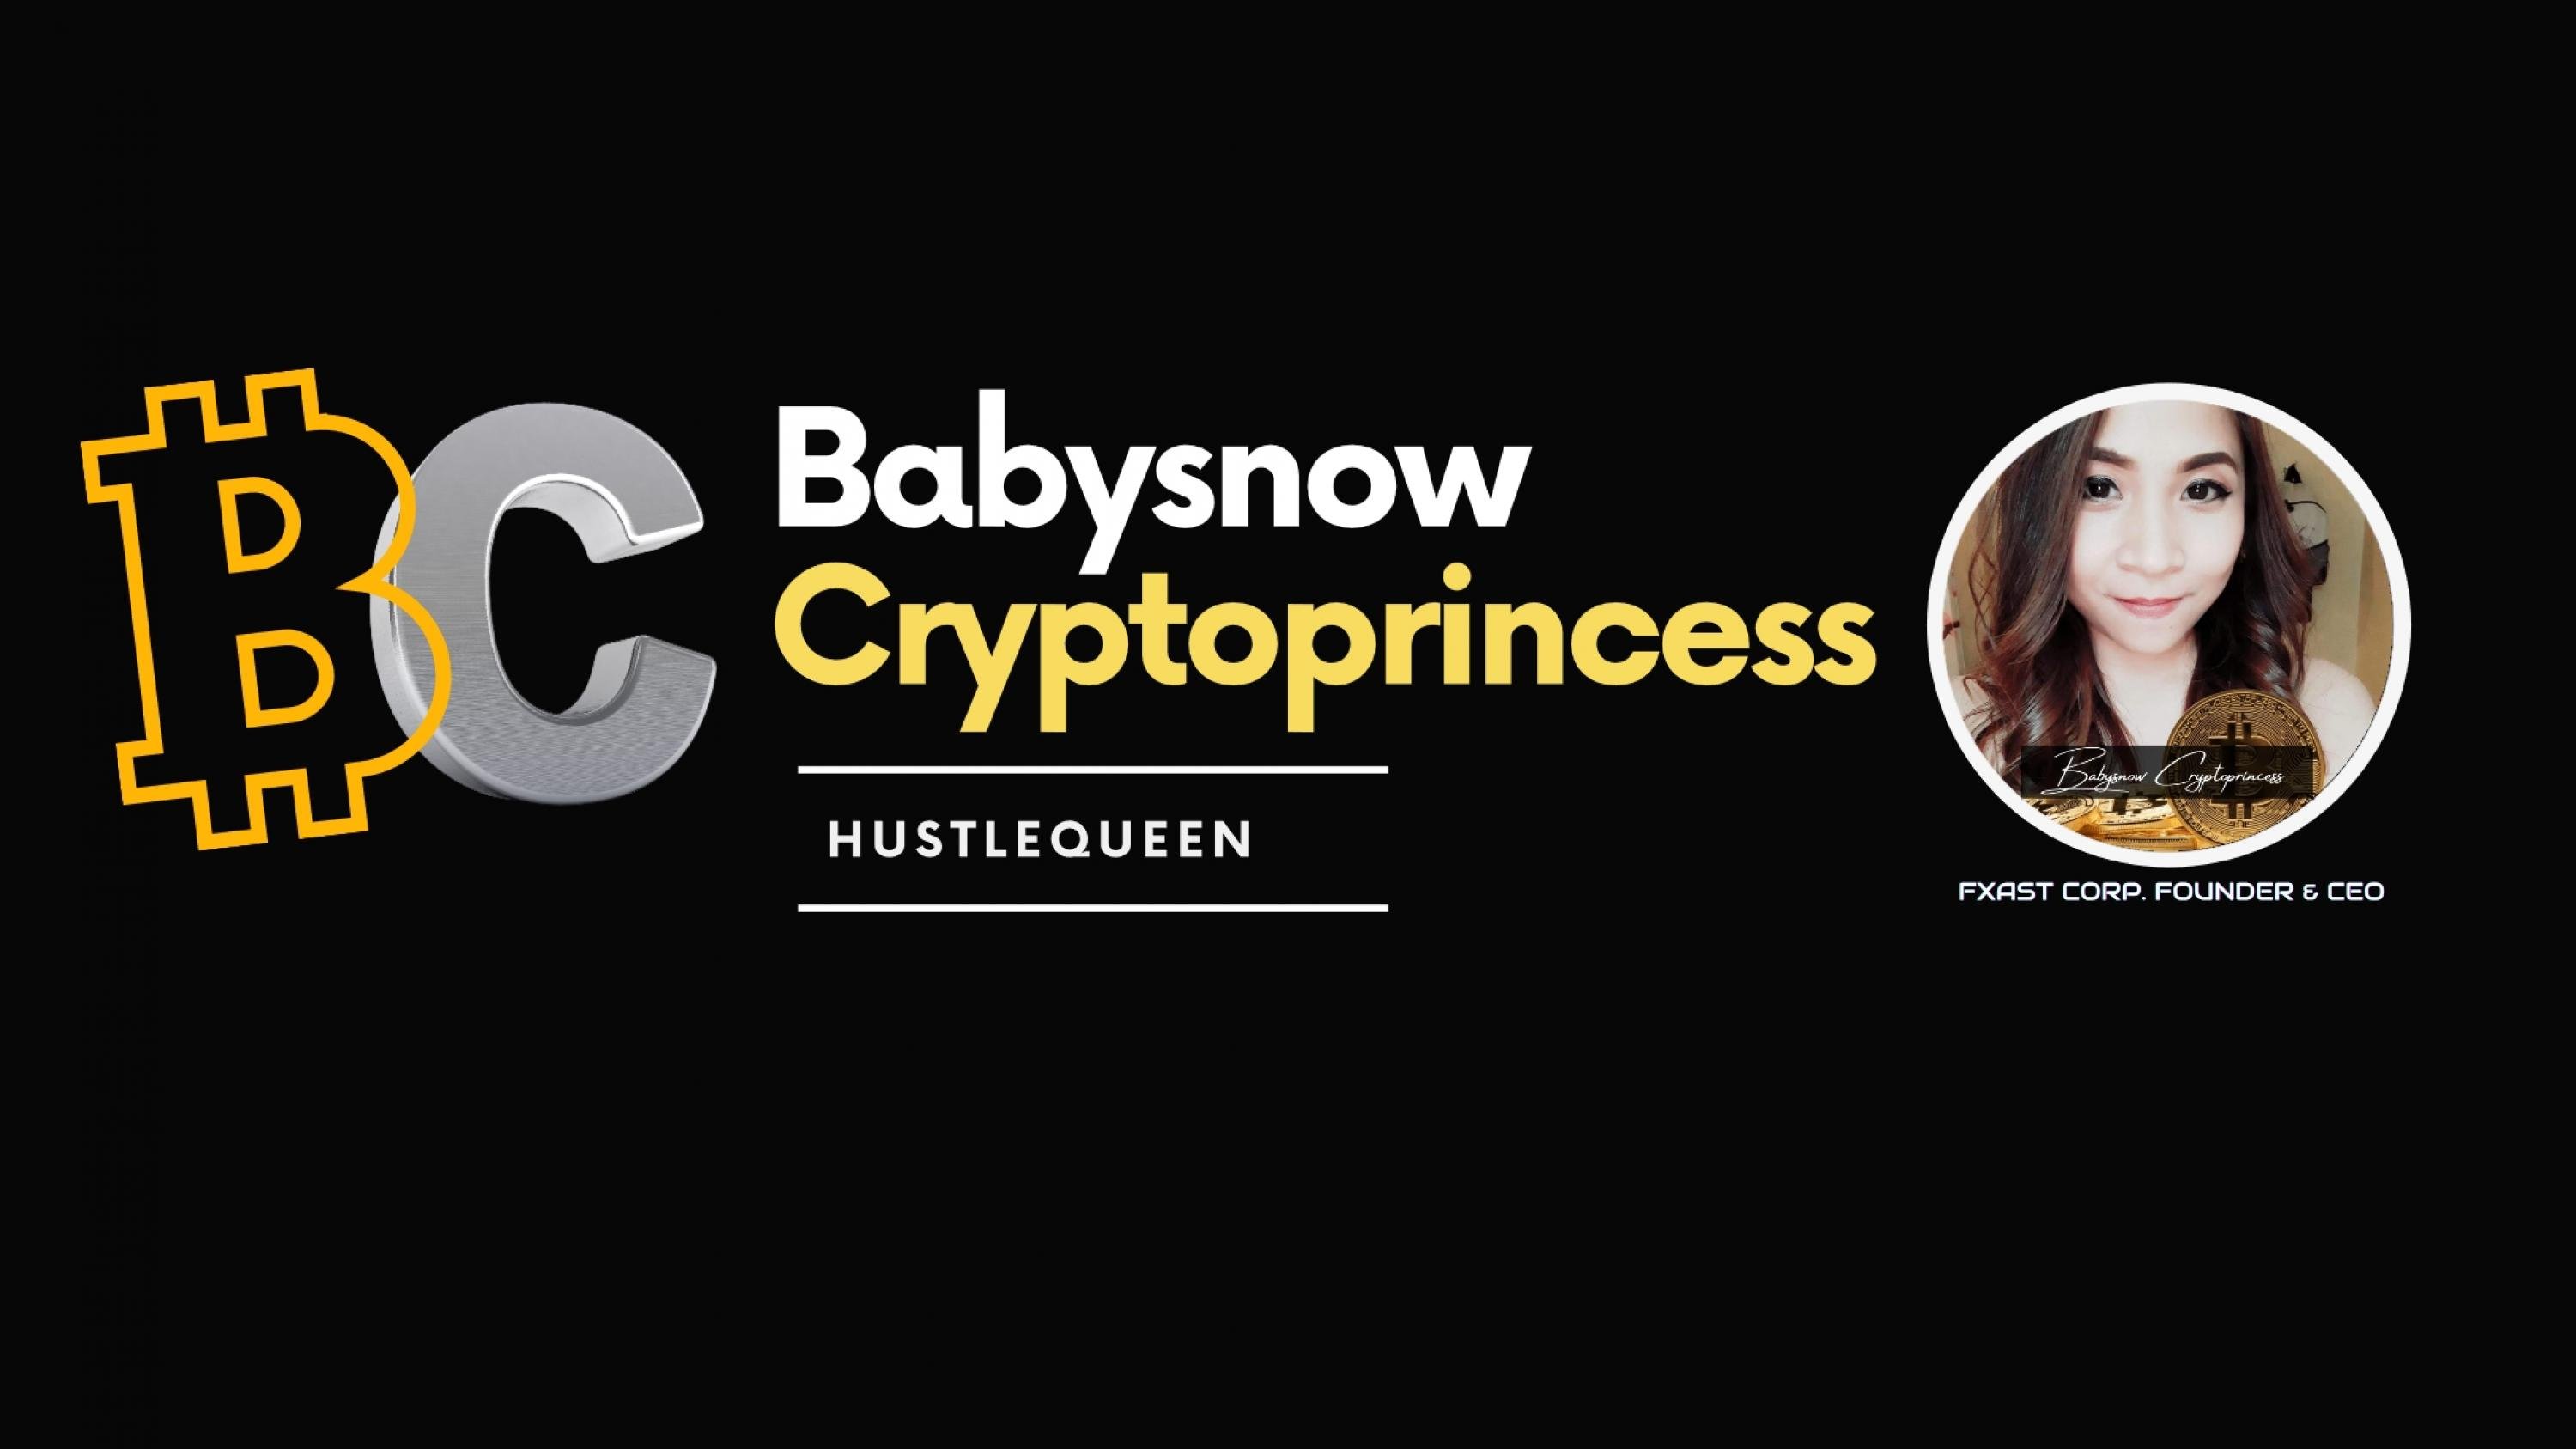 Babysnow Cryptoprincess cover photo